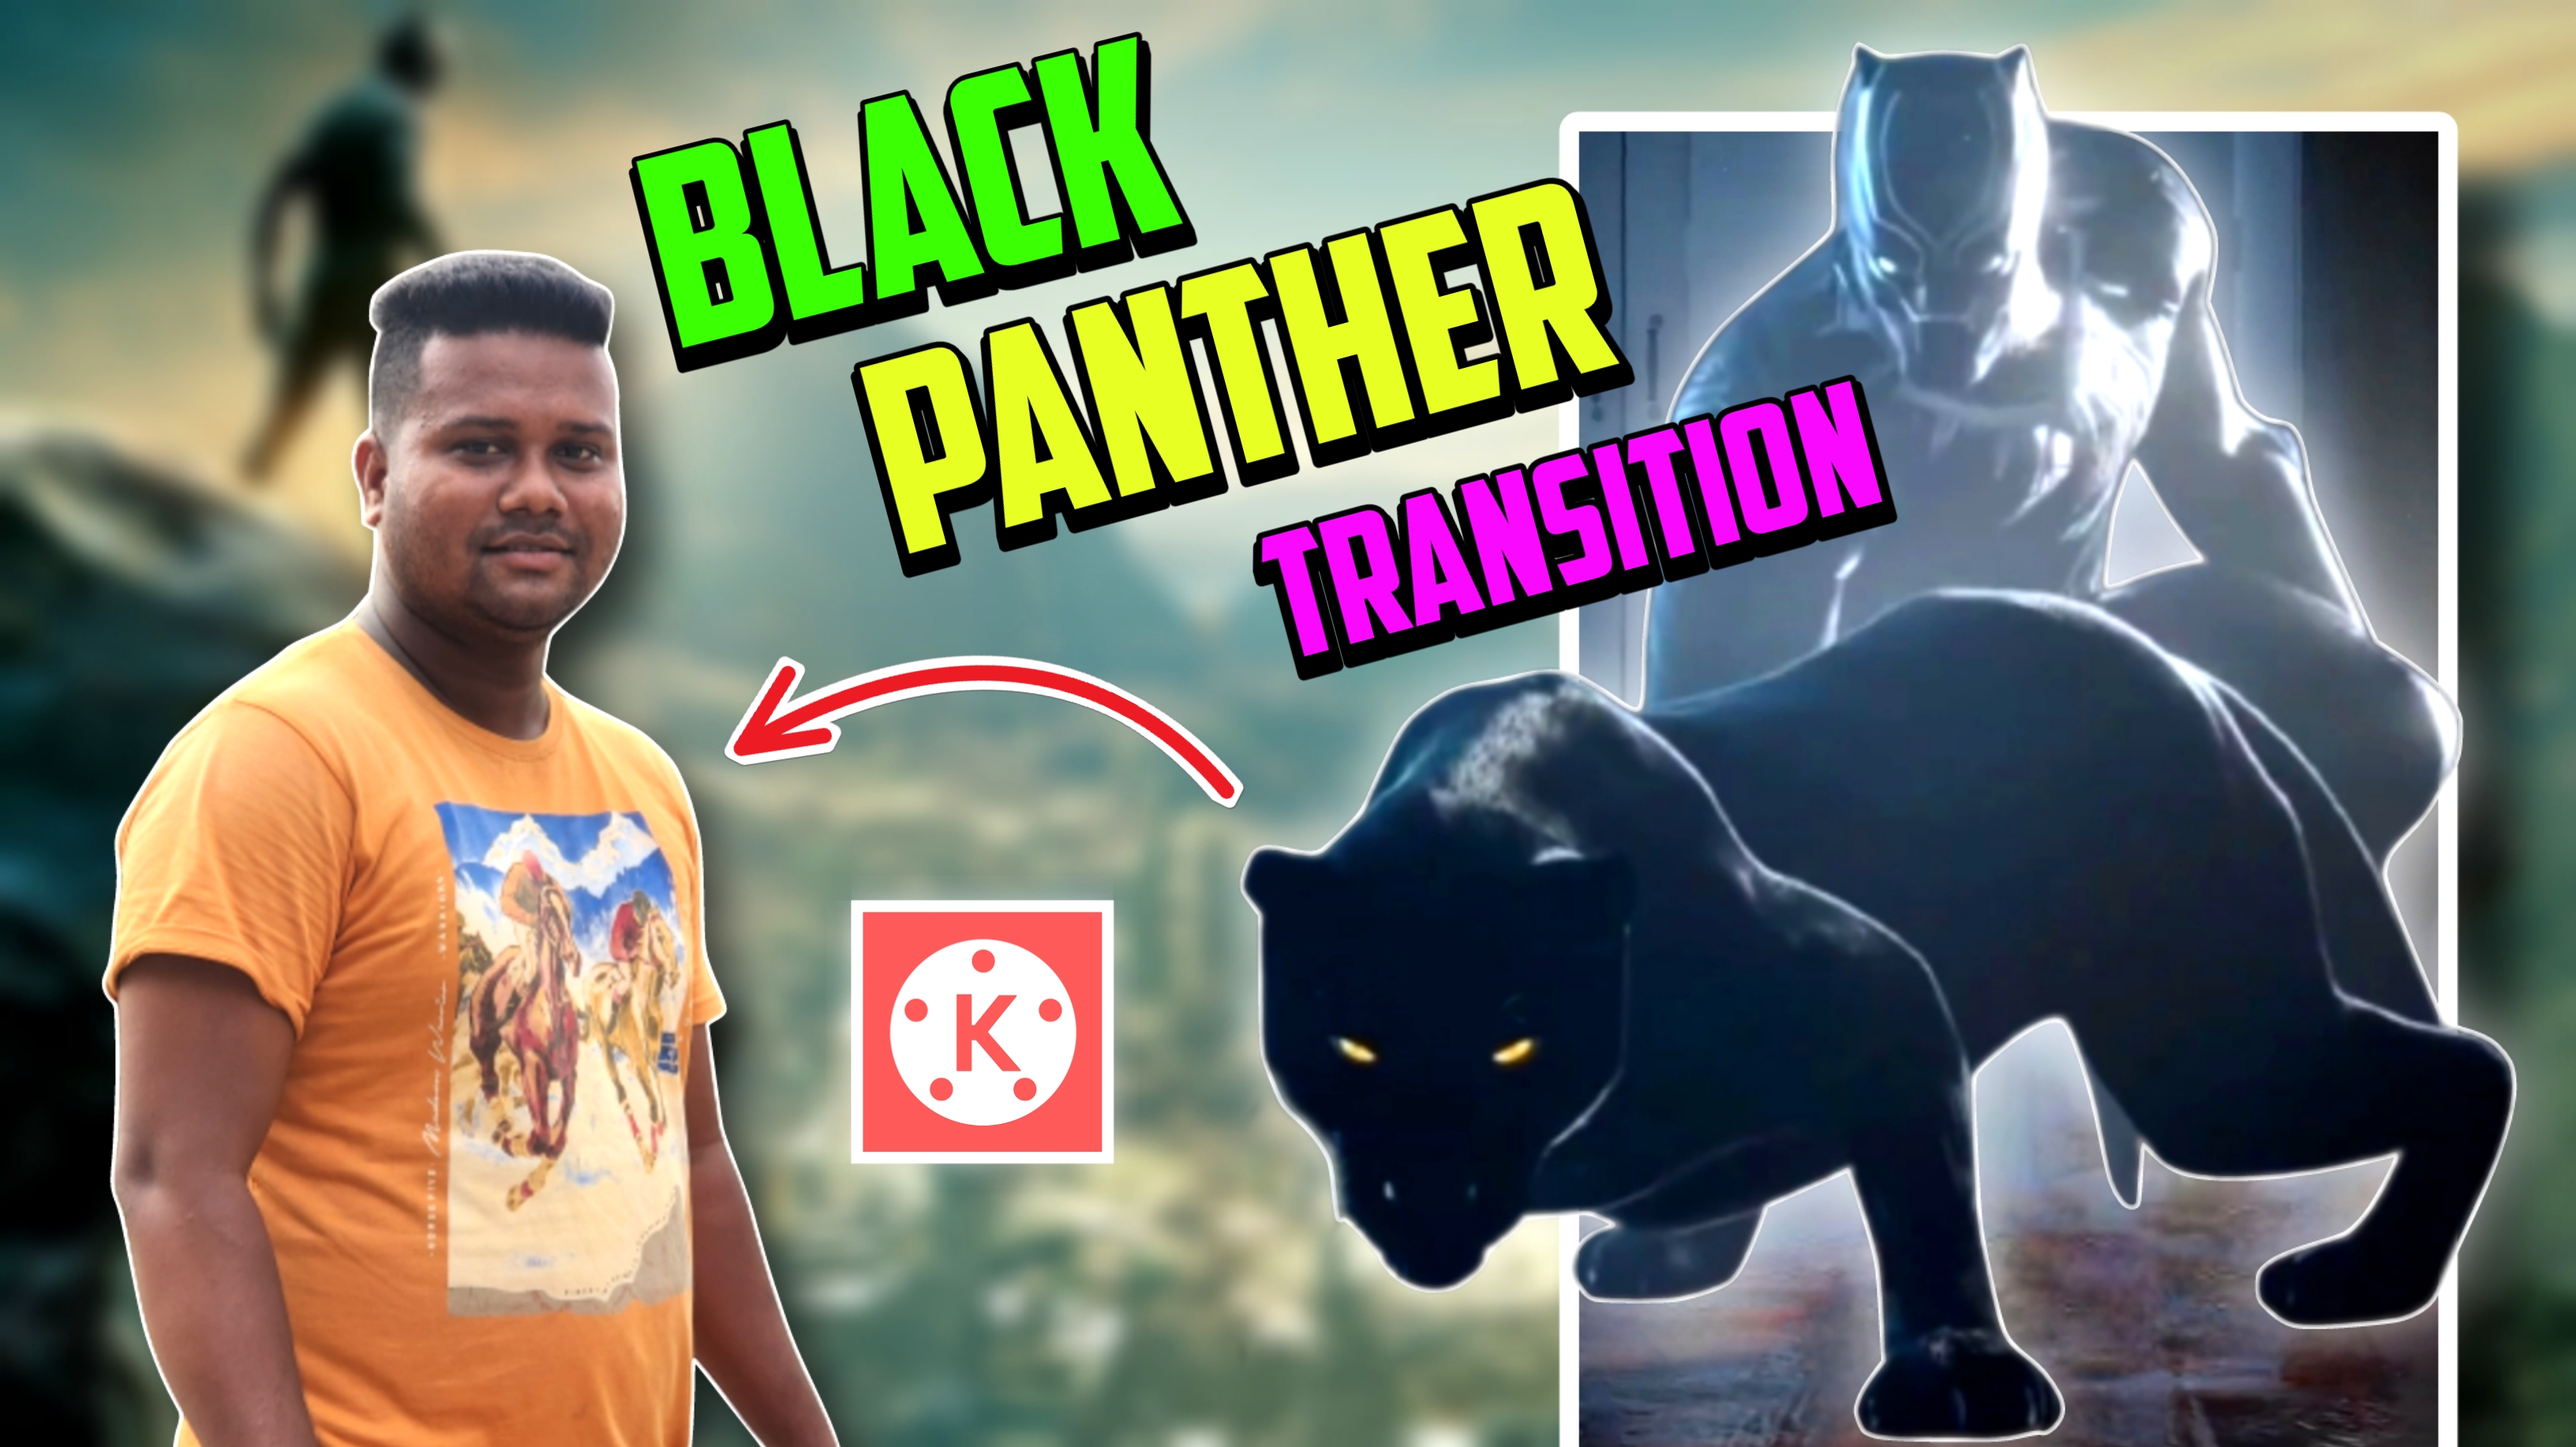 Black Panther Transition Video Editing Instagram Reels Video Editing Jsr ka Londa